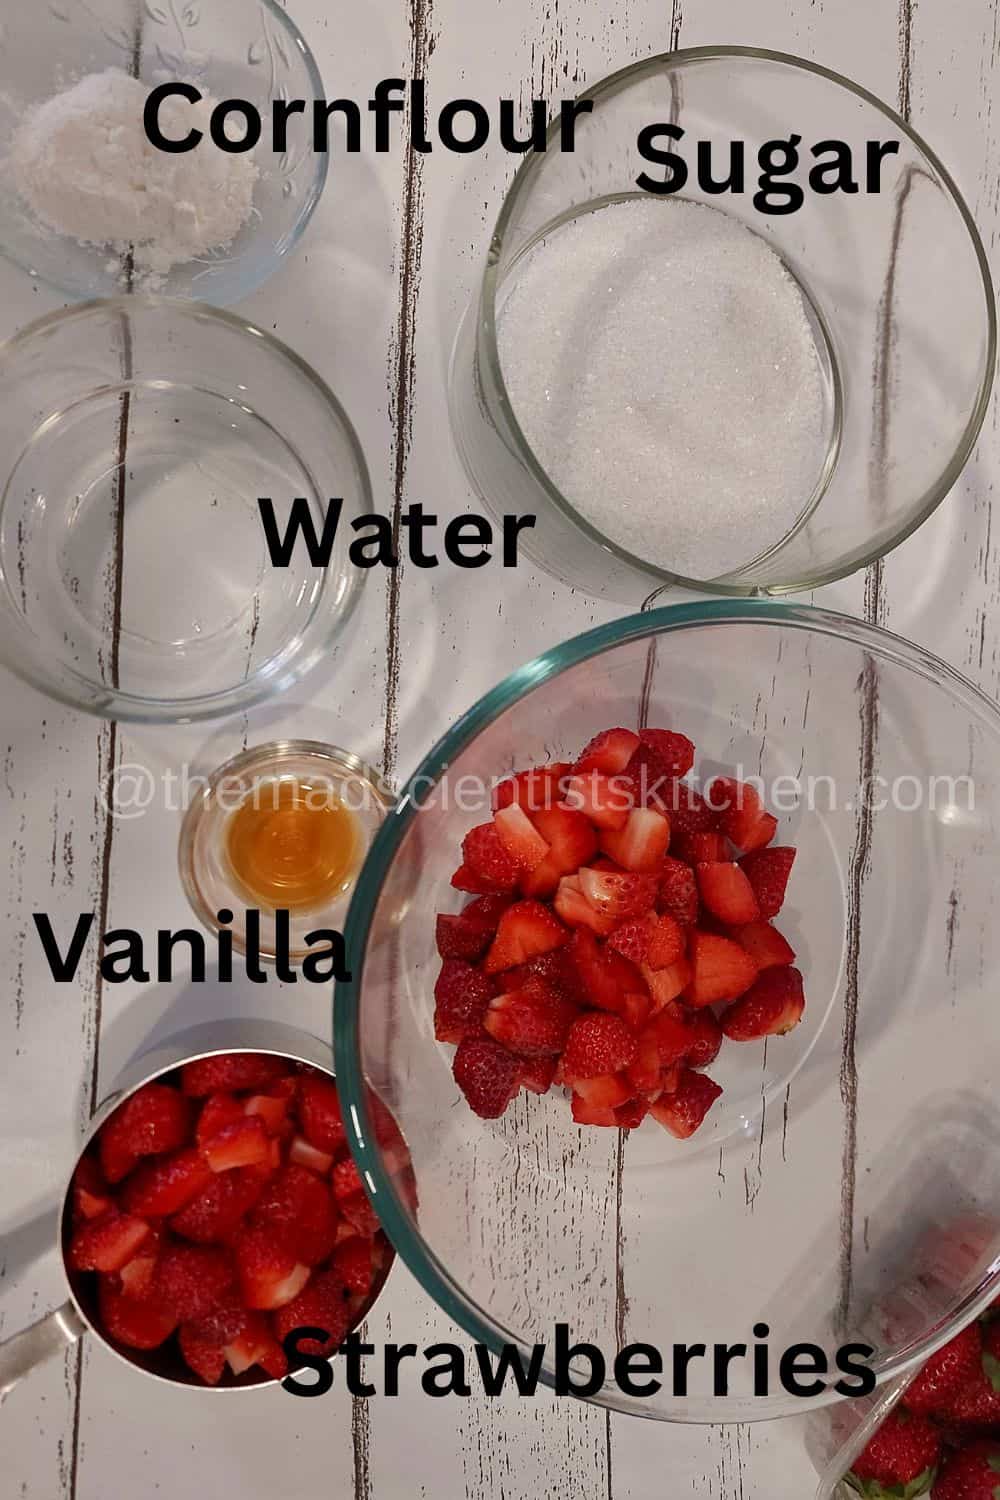 Ingredients to make Strawberry Sauce